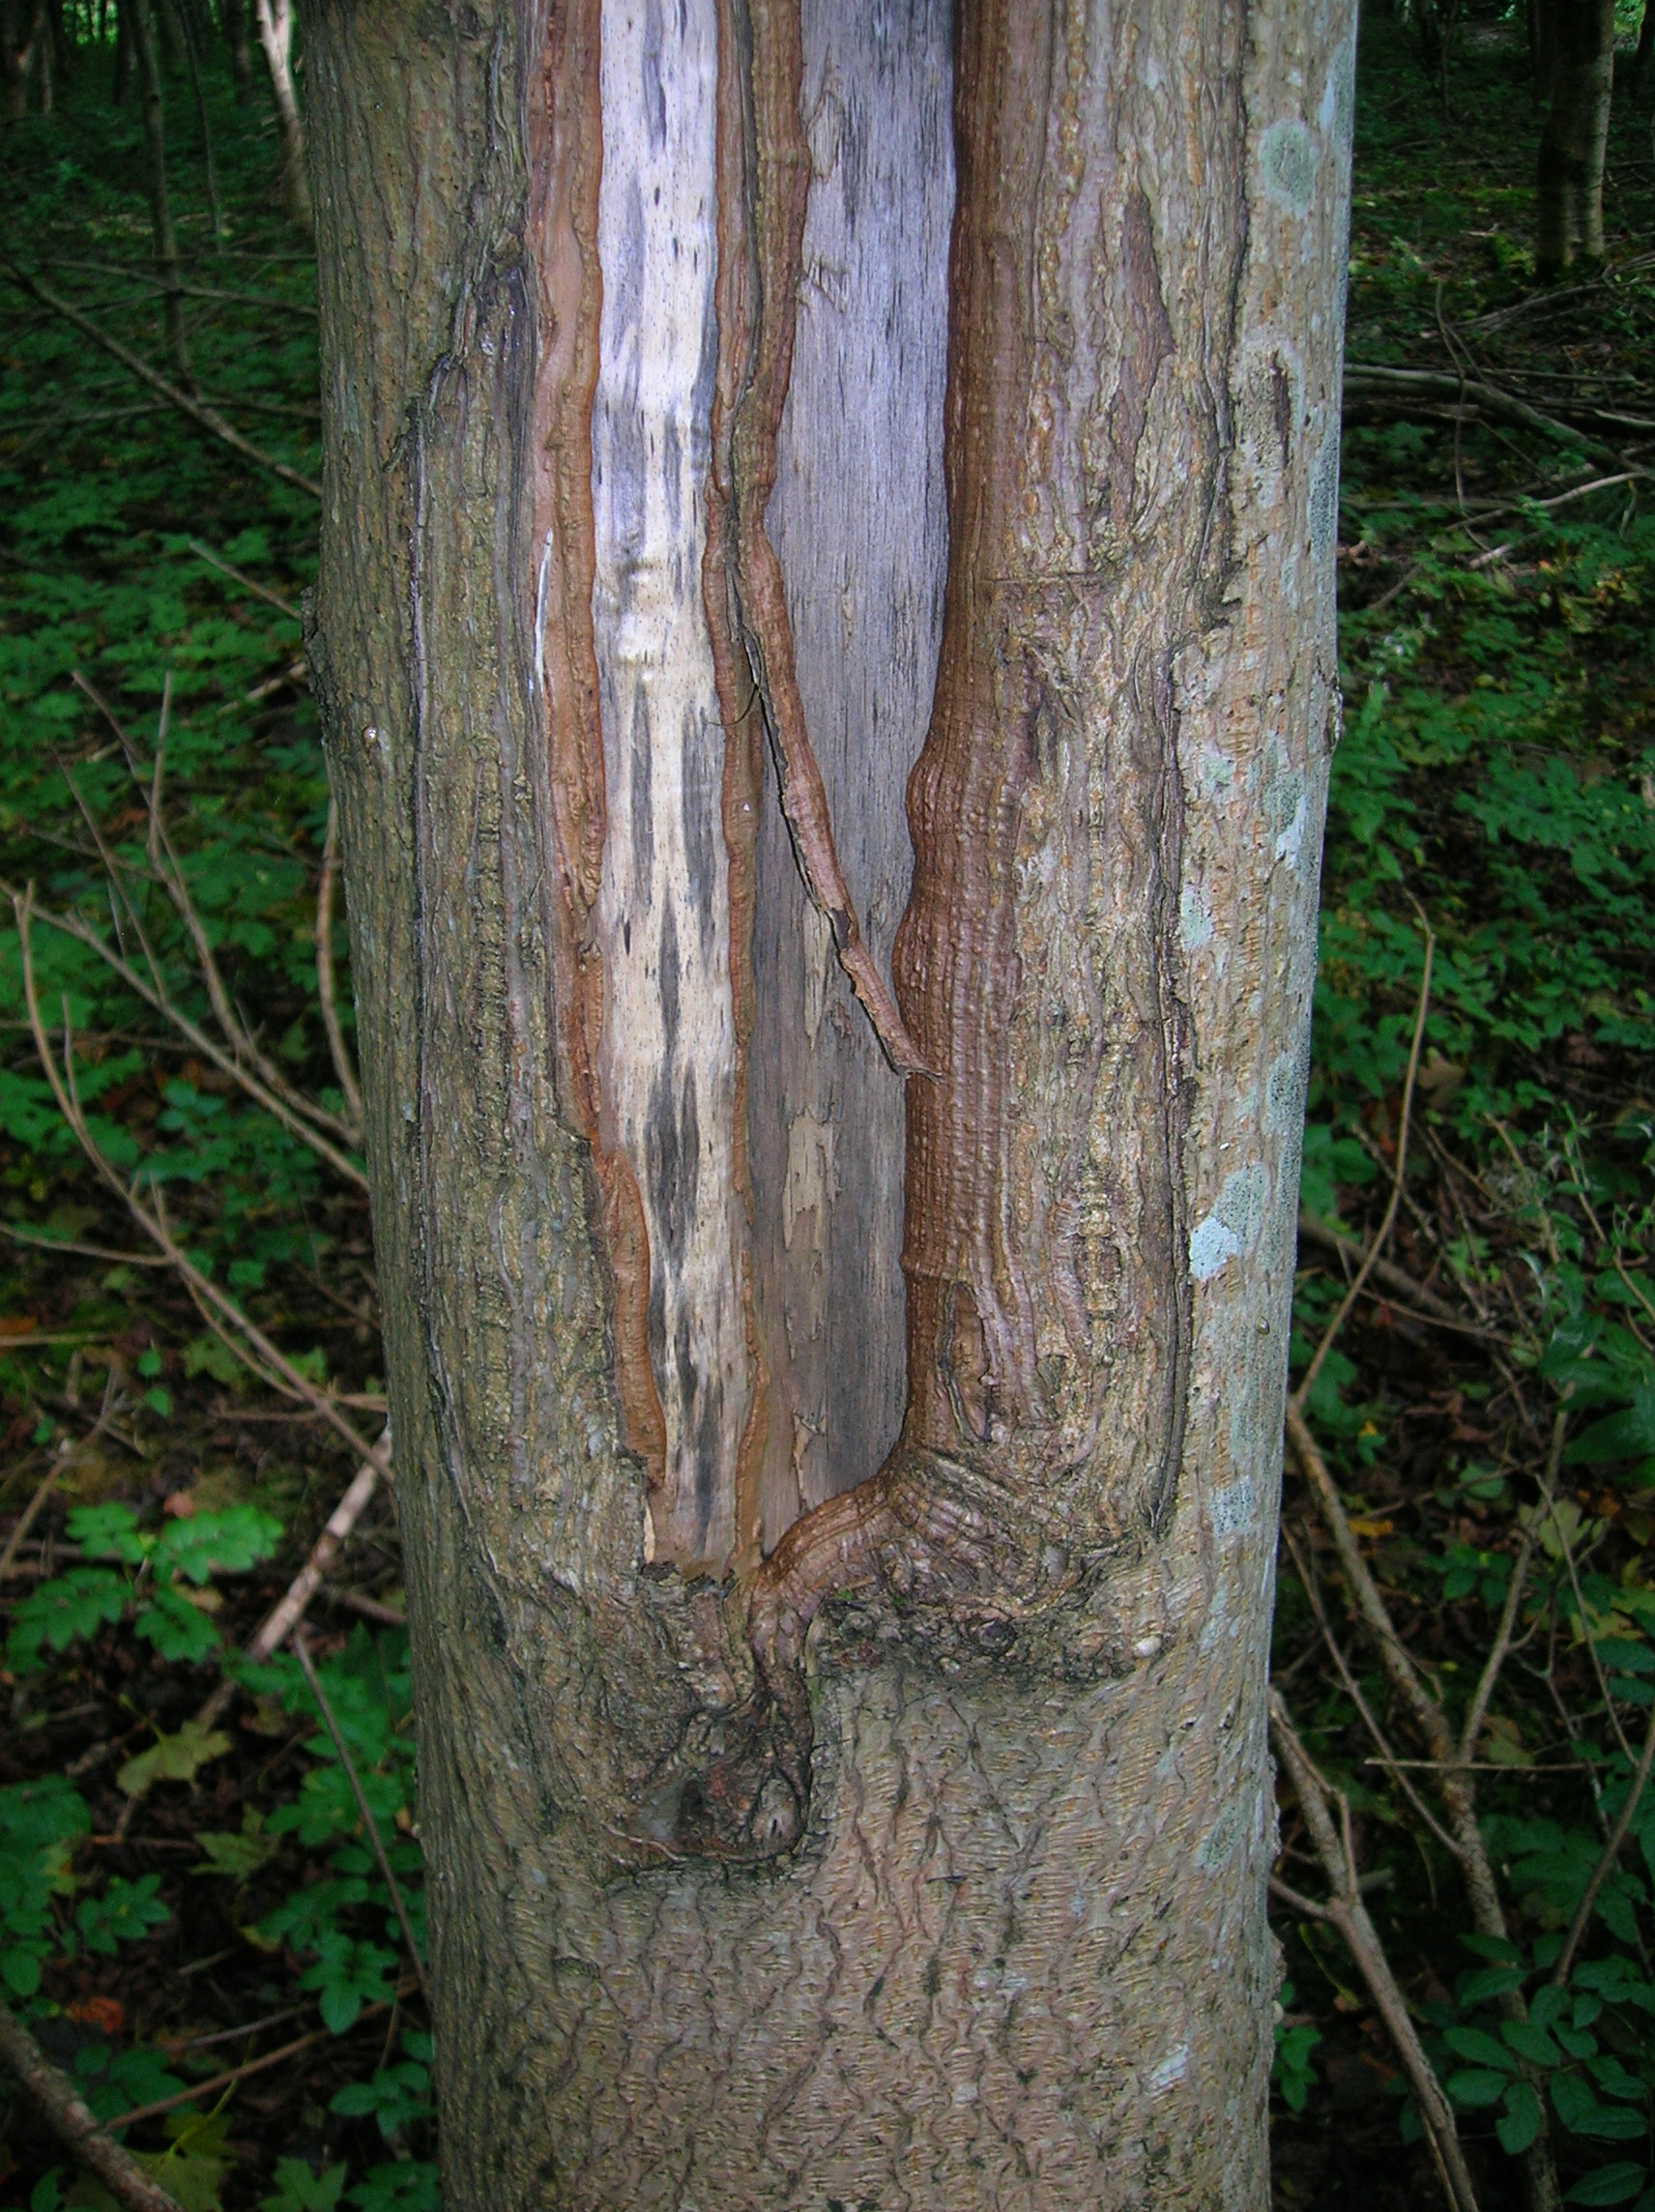 Maple Bark Cracking